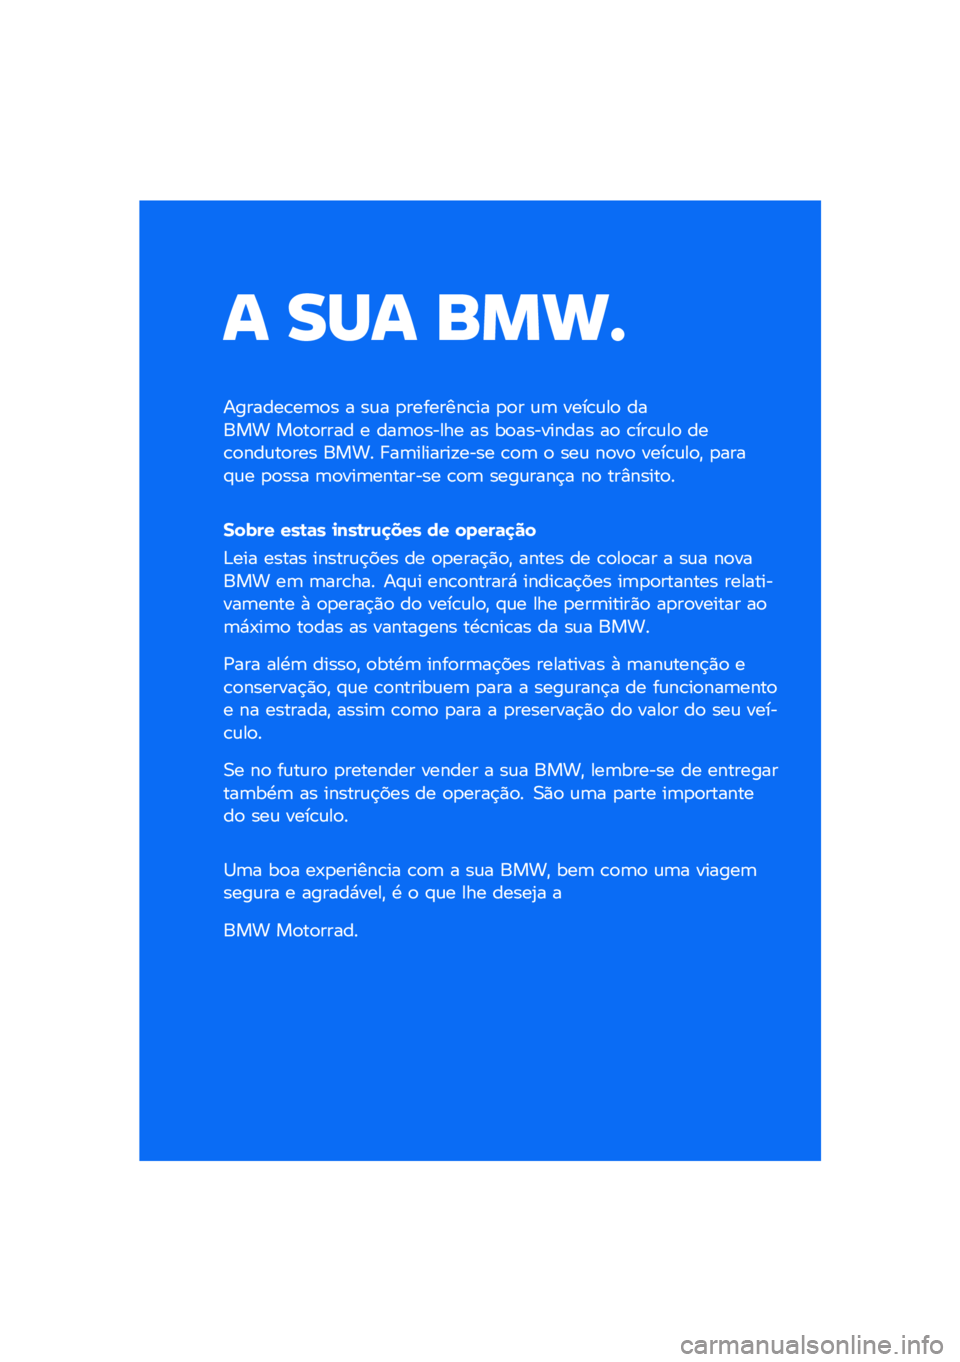 BMW MOTORRAD R NINE T 2021  Manual do condutor (in Portuguese) � ��� ����\b
�������\b��	�
� � ��\f� �
��������\b�� �
�
� �\f�	 ����\b�\f��
 ����� ��
��
���� � ���	�
����� �� ��
��������� ��
 �\b���